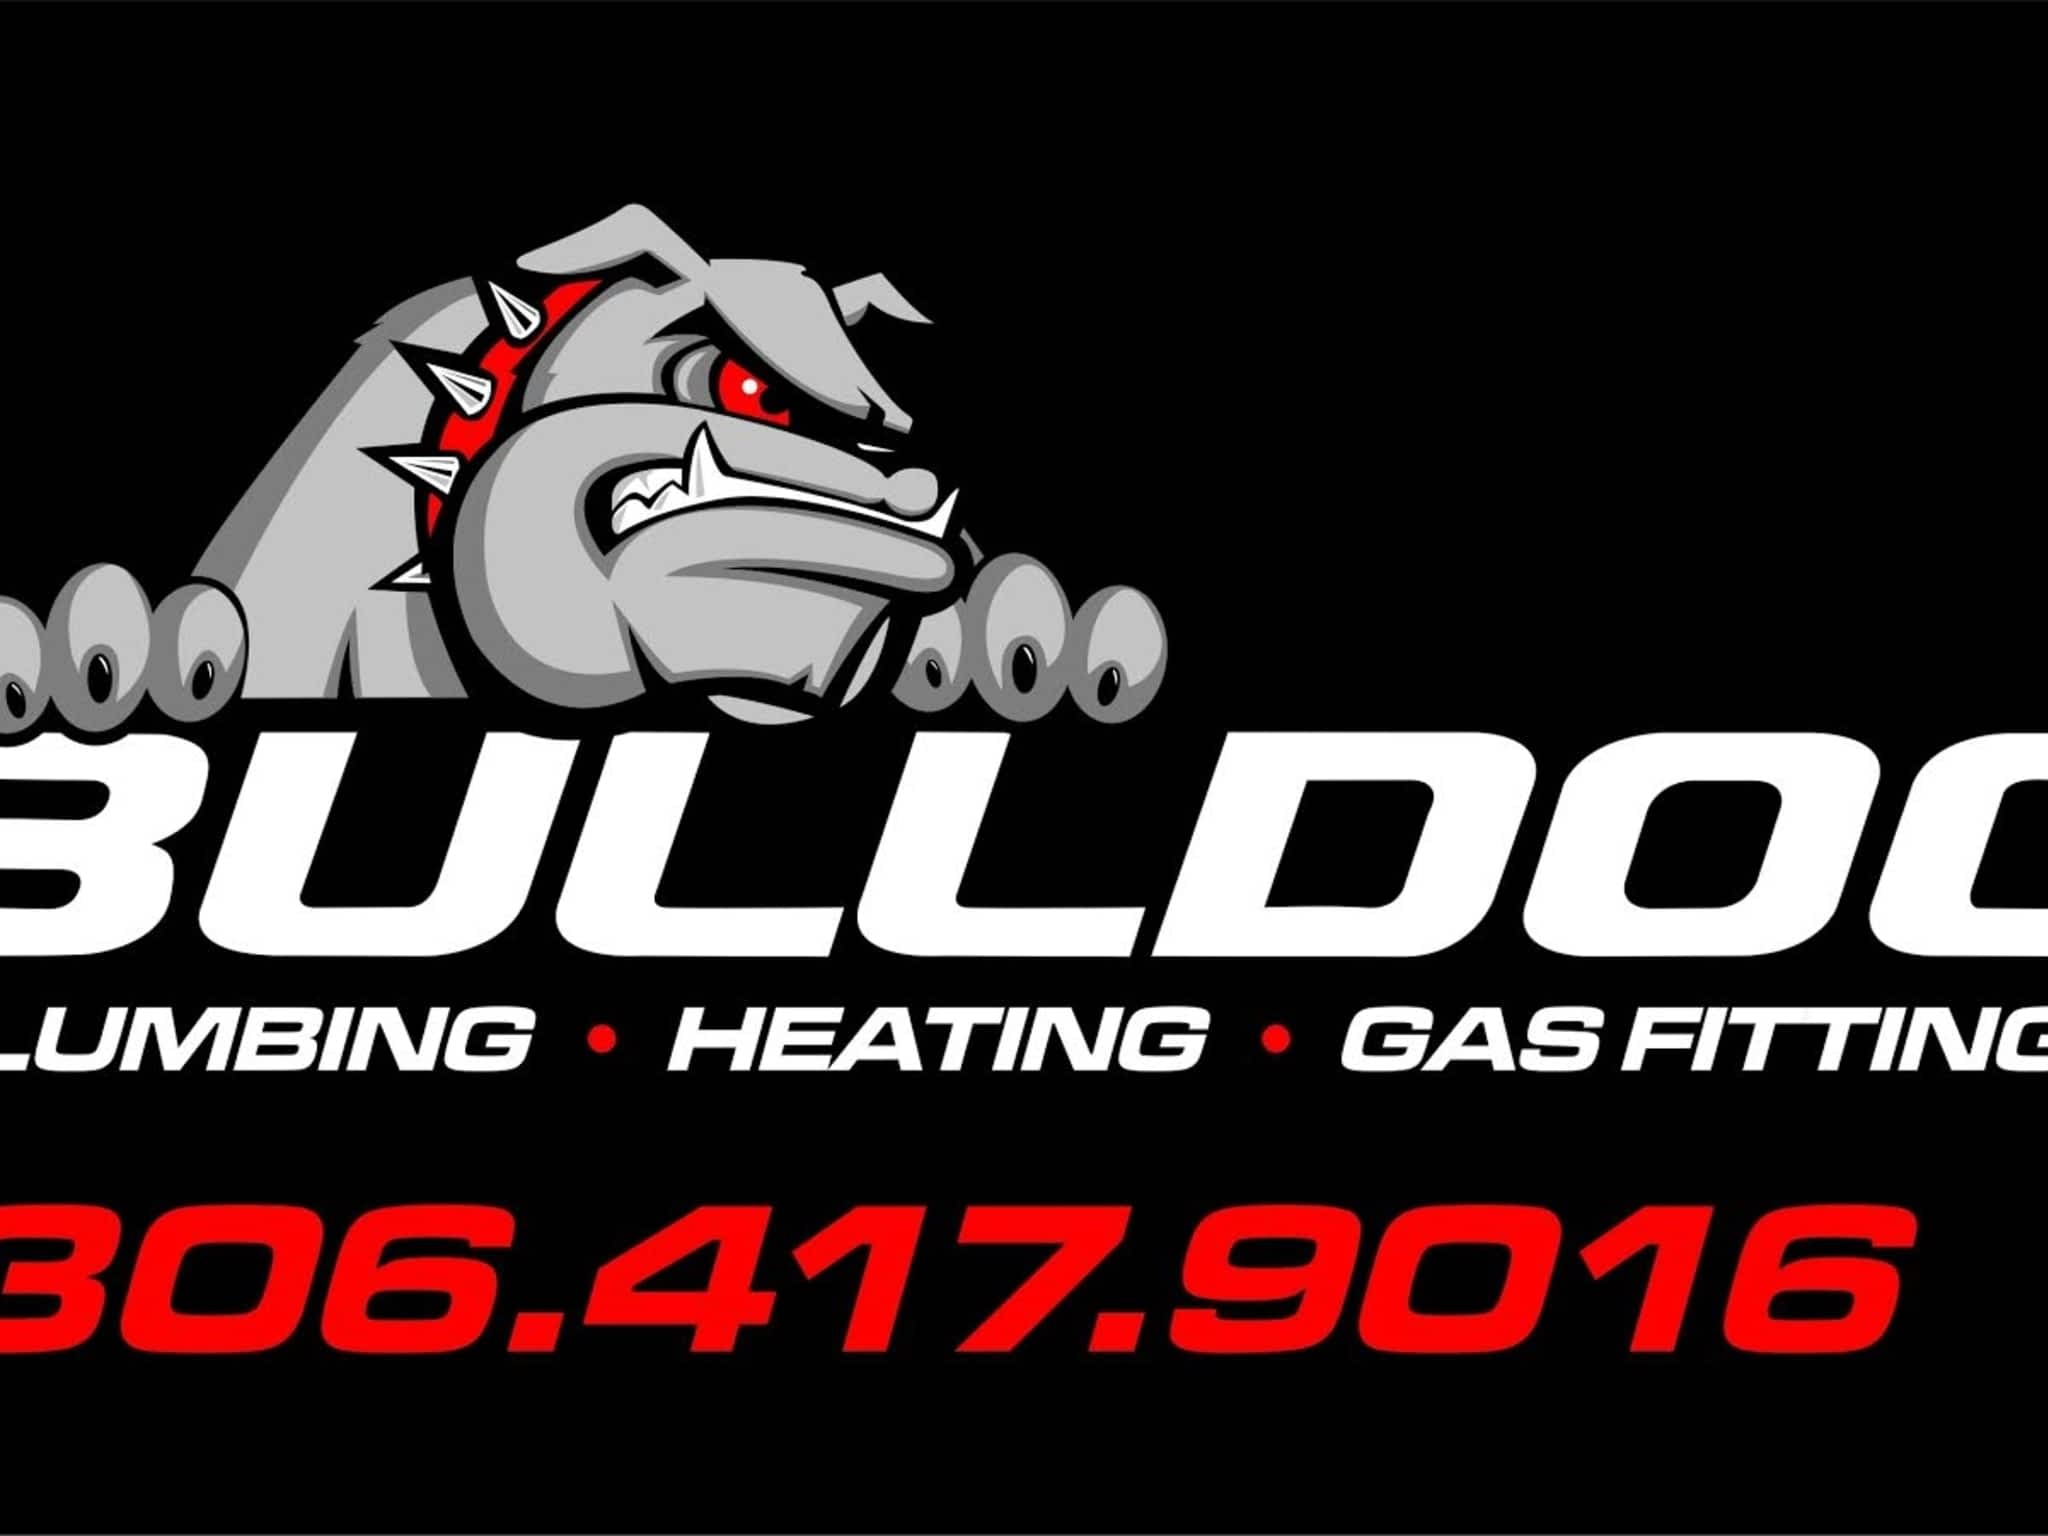 photo Bulldog Plumbing Heating Gas Fitting